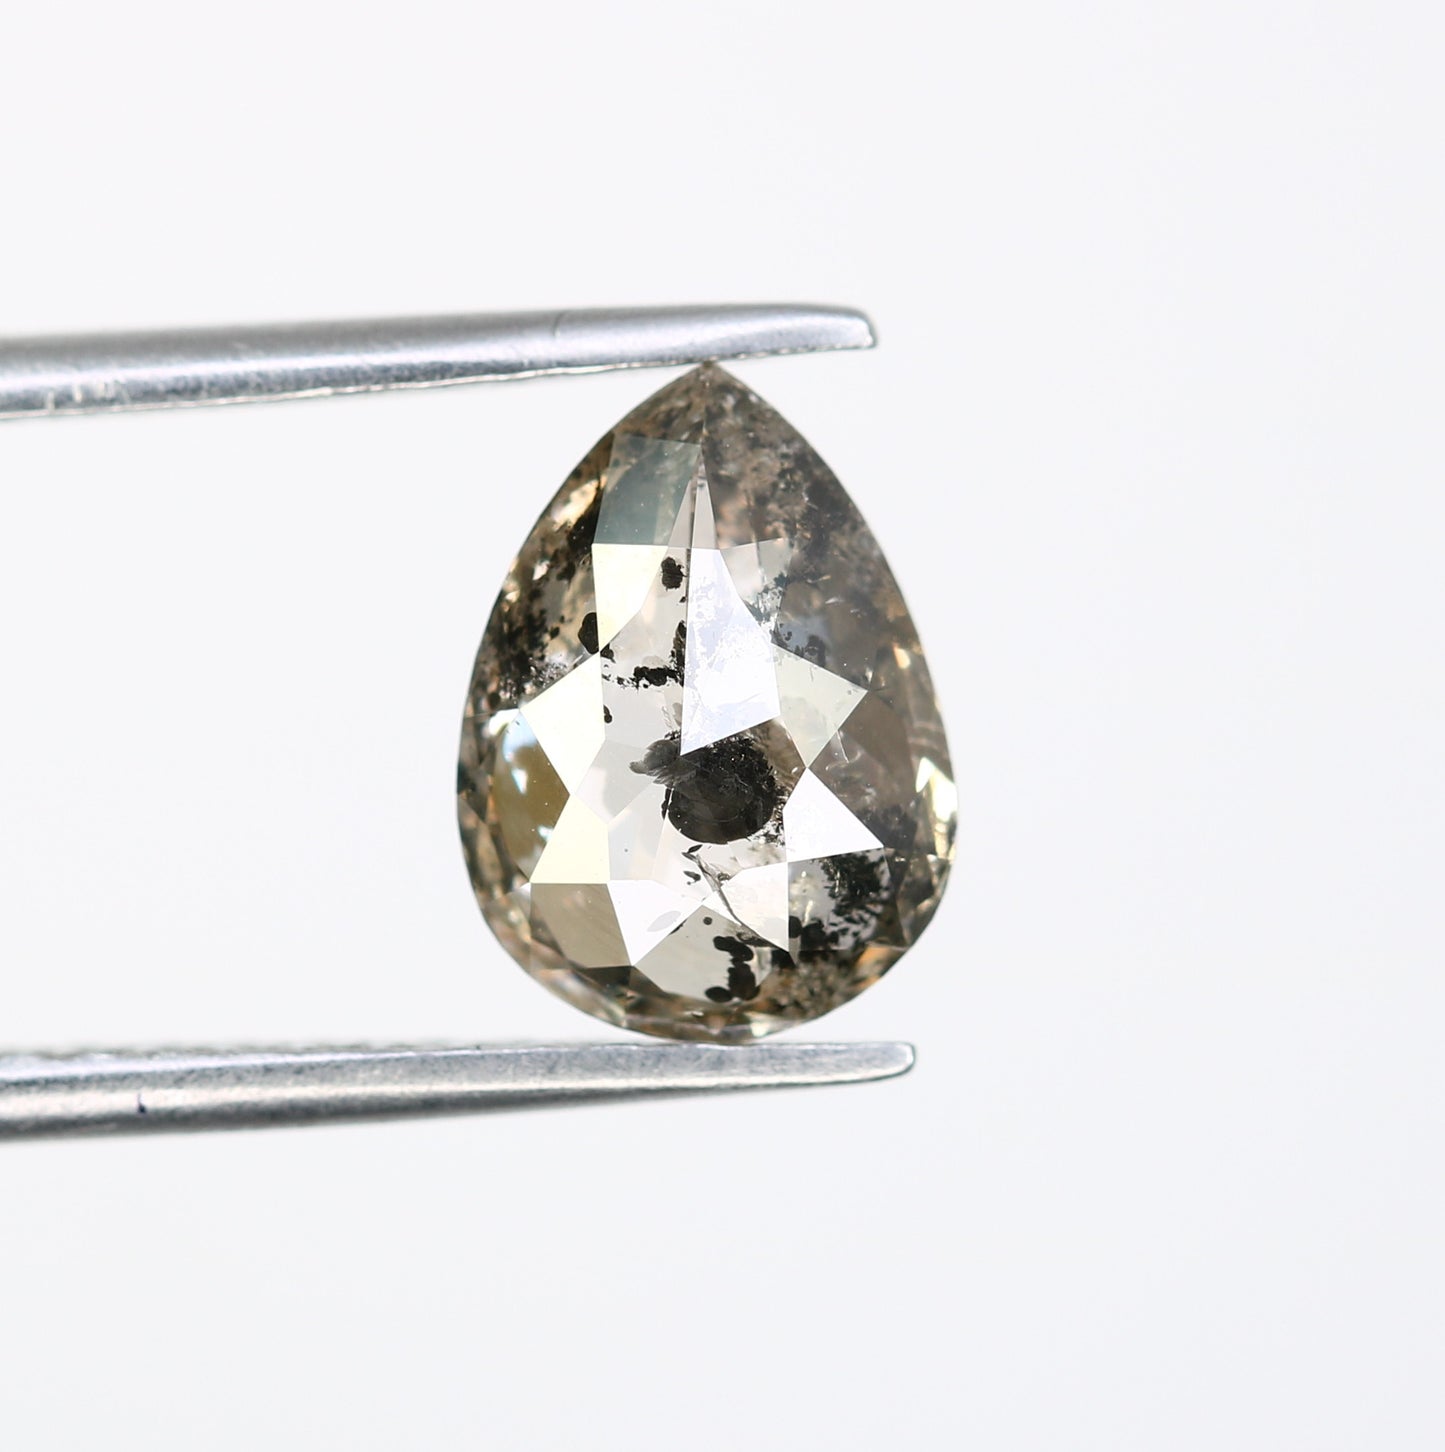 Pear Cut Diamond 1.64 Carat Natural Loose Salt And Pepper Diamond Ring